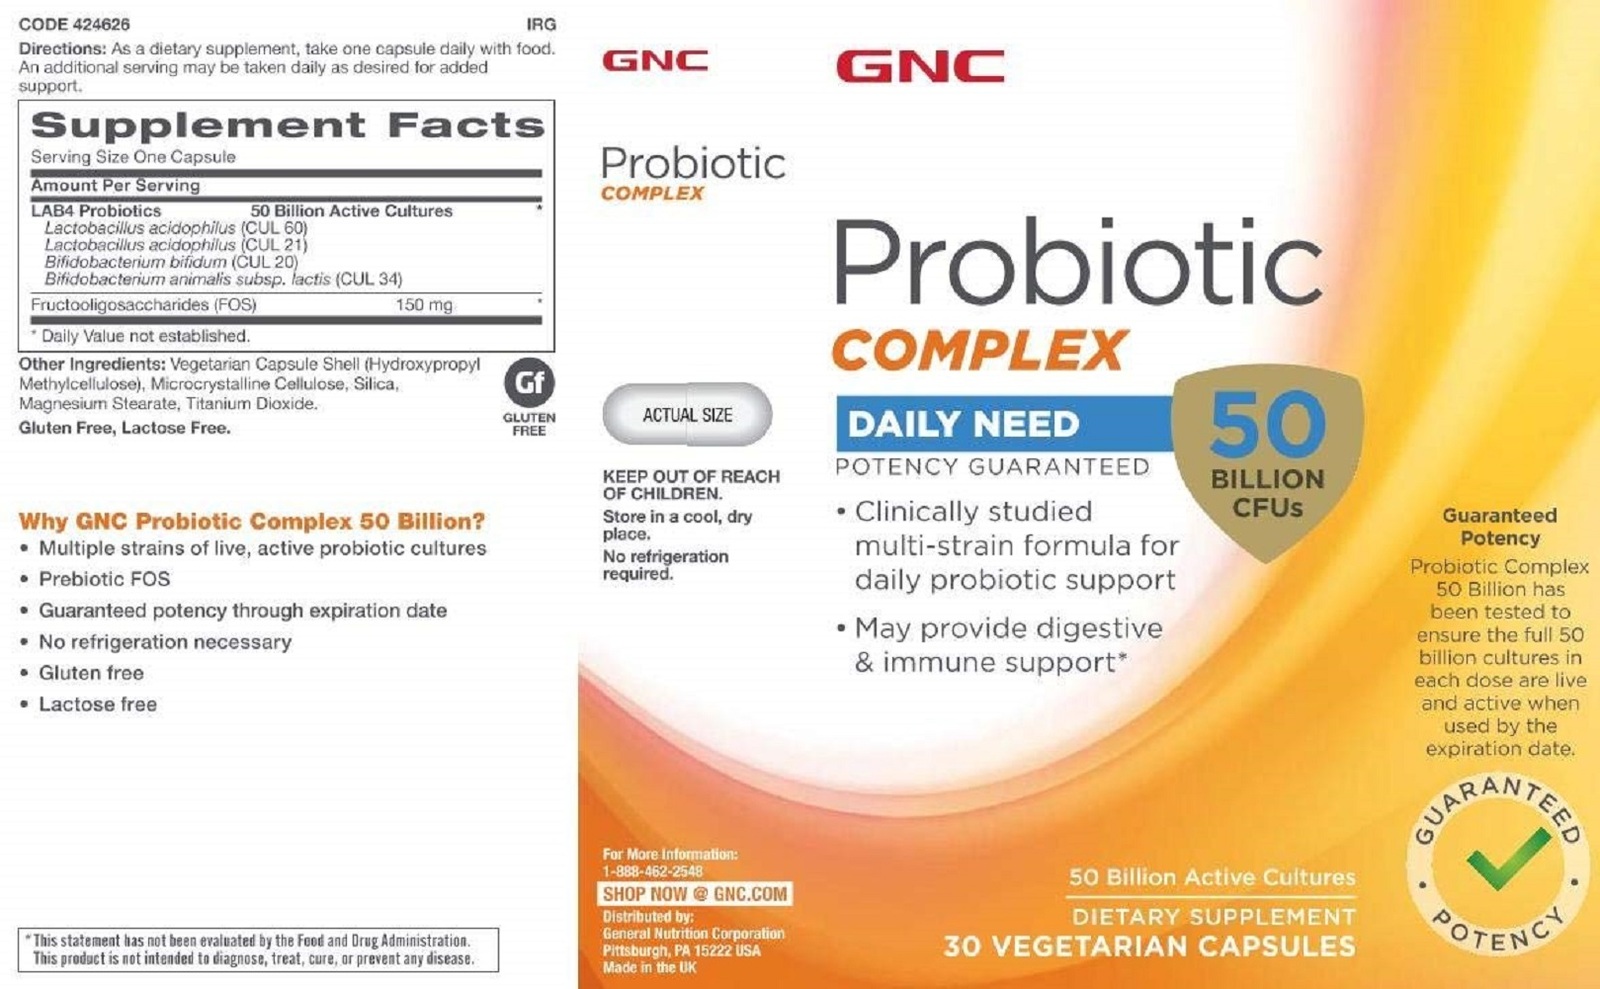 GNC Probiotic Complex, Daily Need, 50 Billion CFUs, 30 Capsules, Daily Probiotic